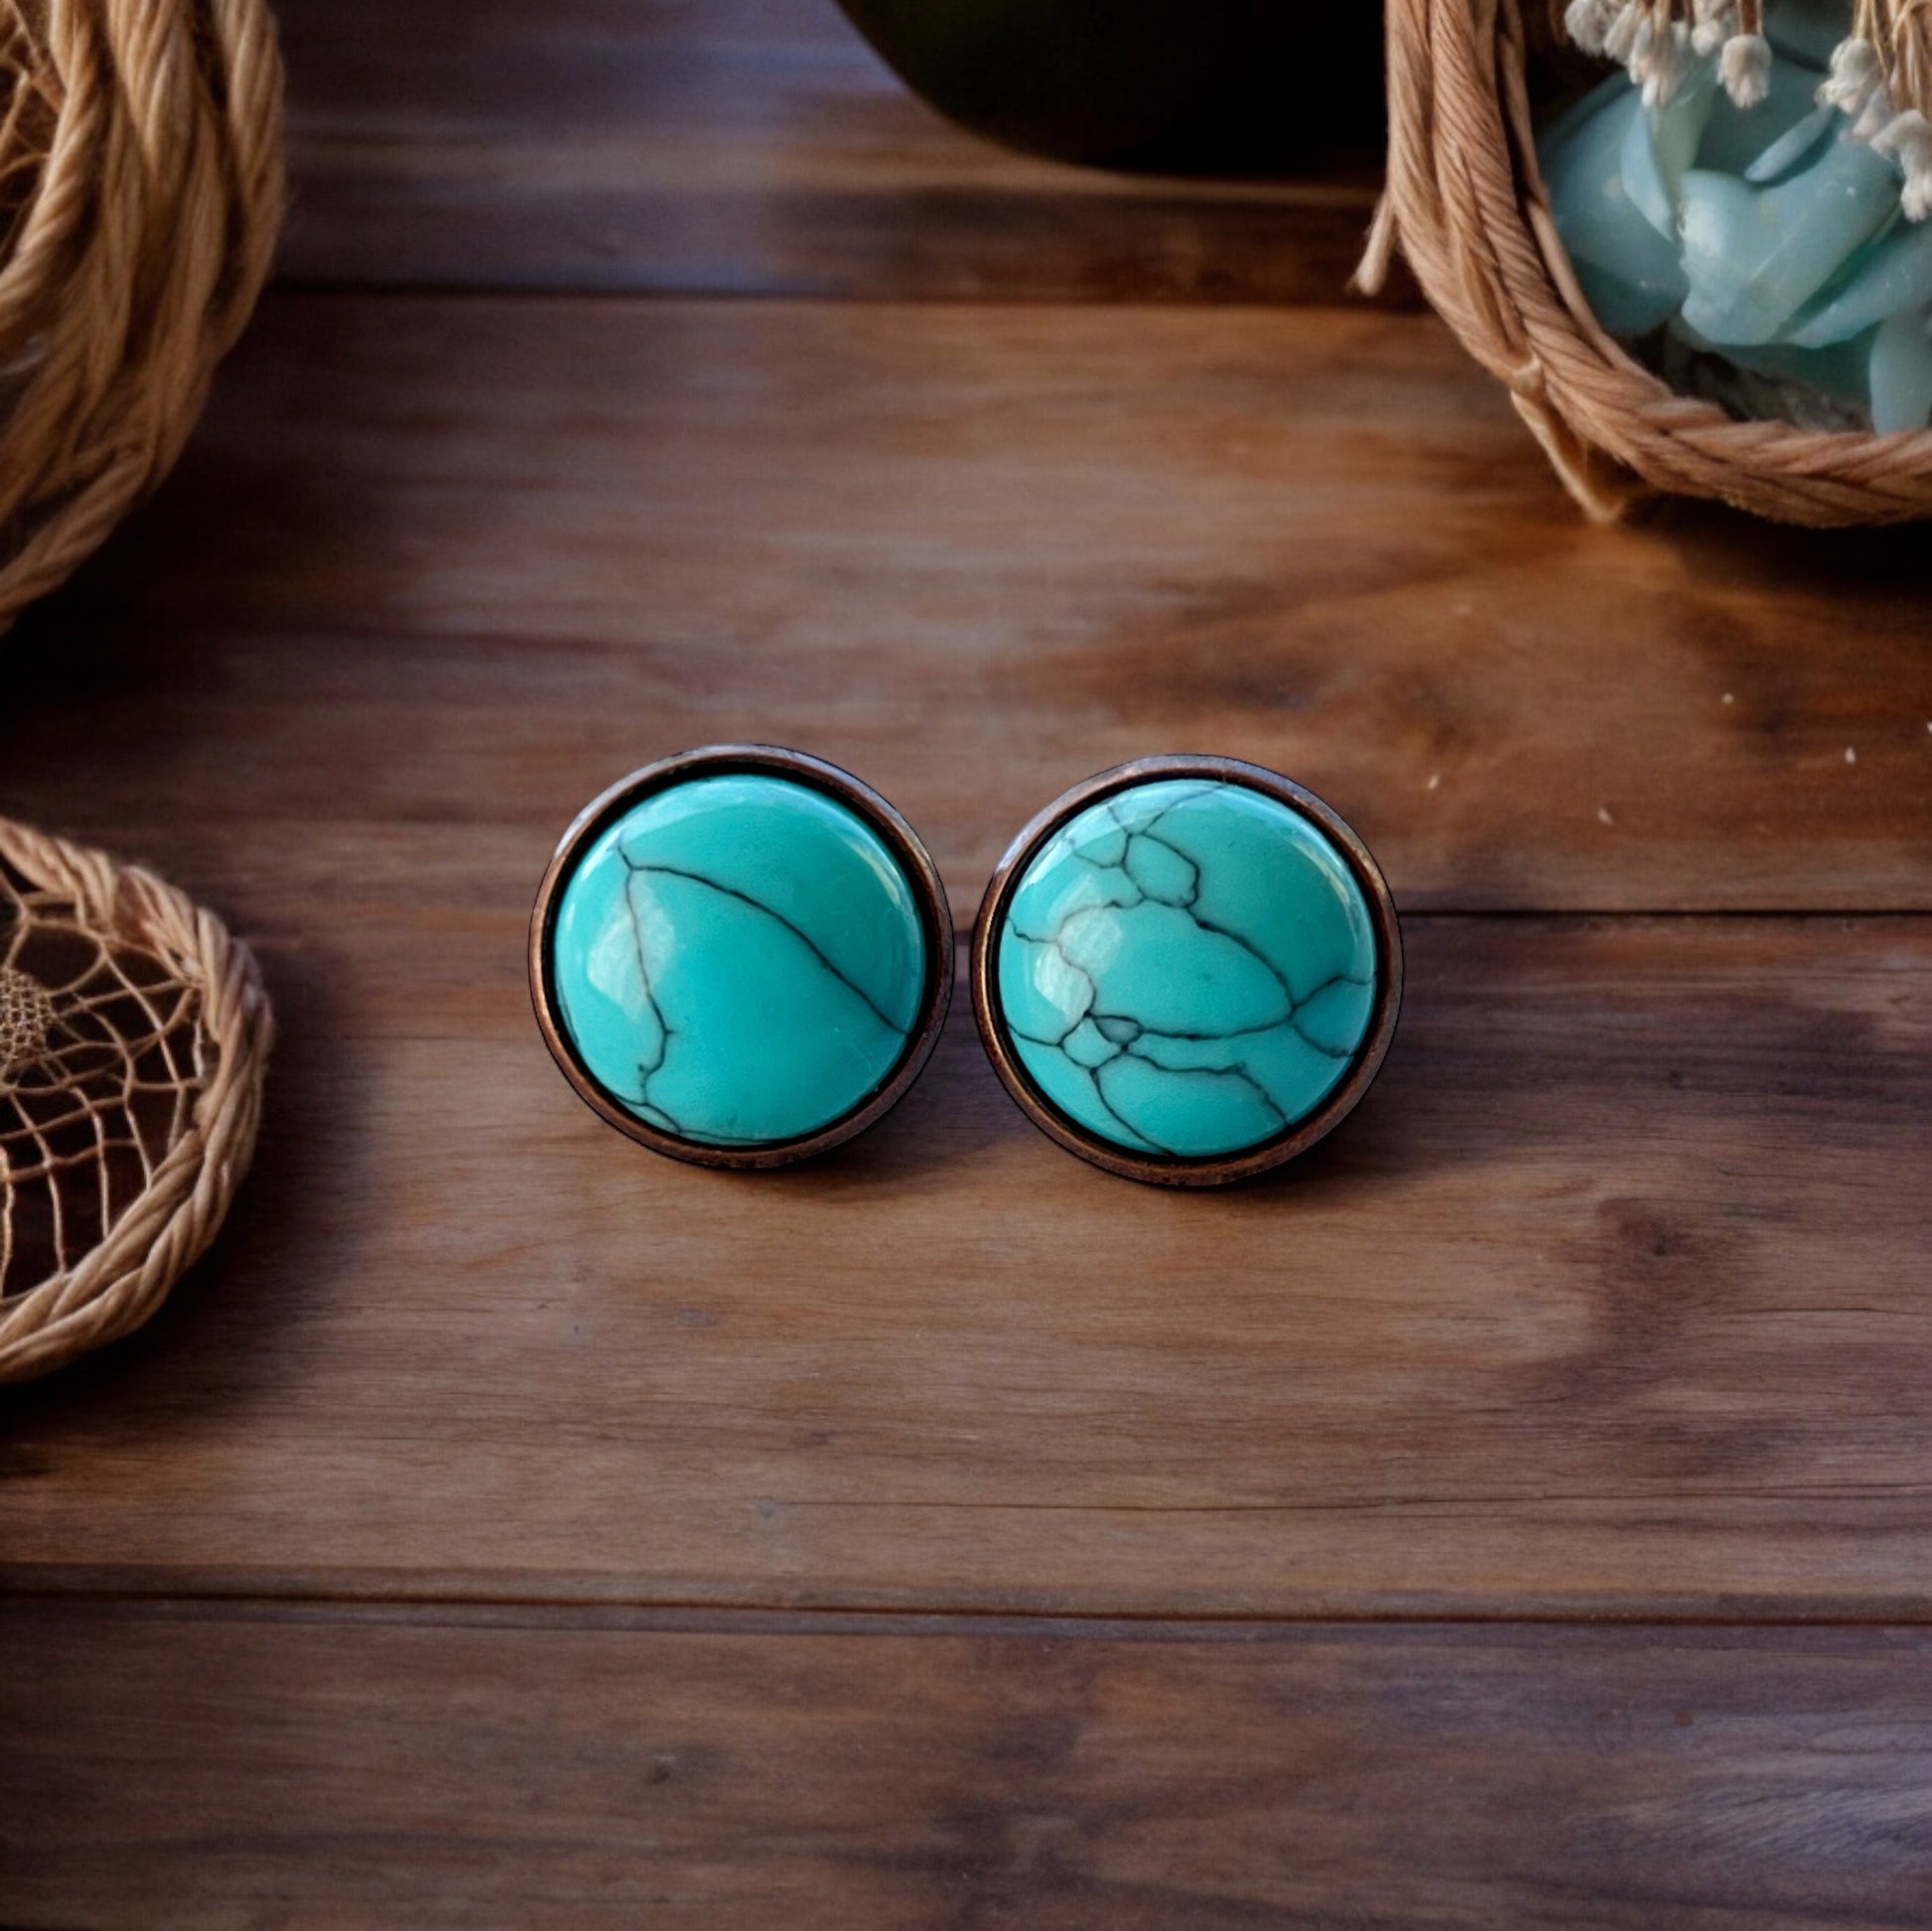 Boho Western Turquoise Copper Stud Earrings: Chic Southwestern Style